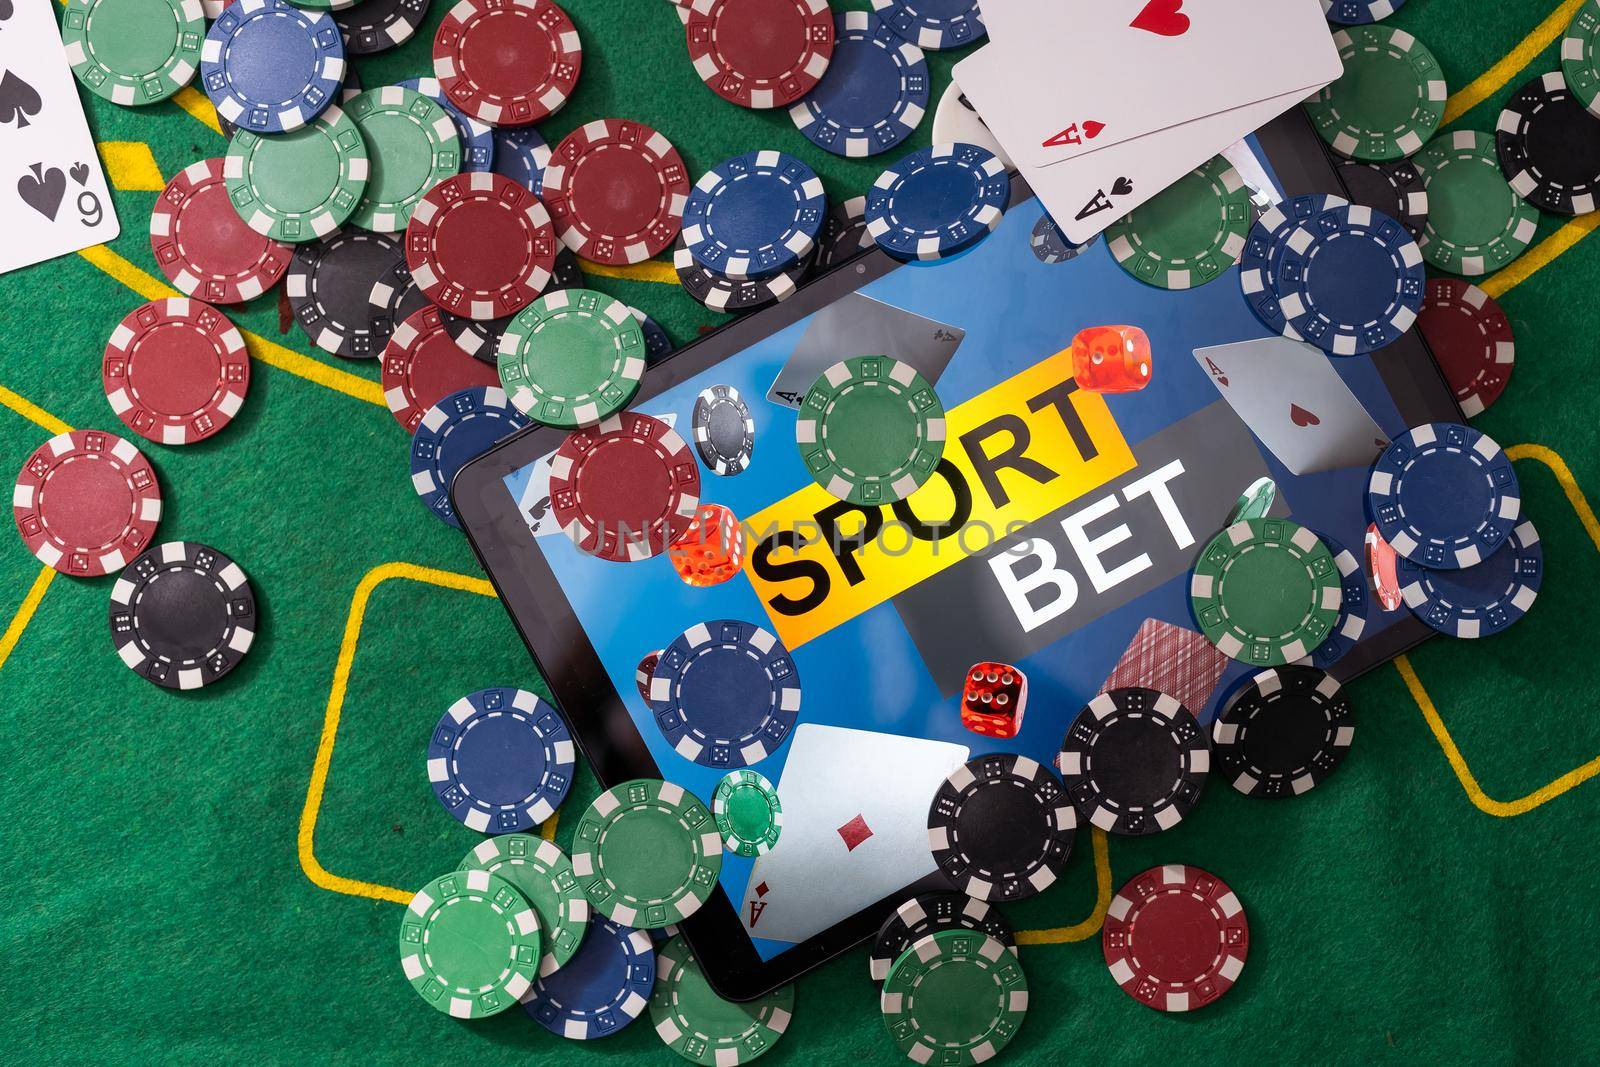 bets online at bookmakers website. smartphone, poker.